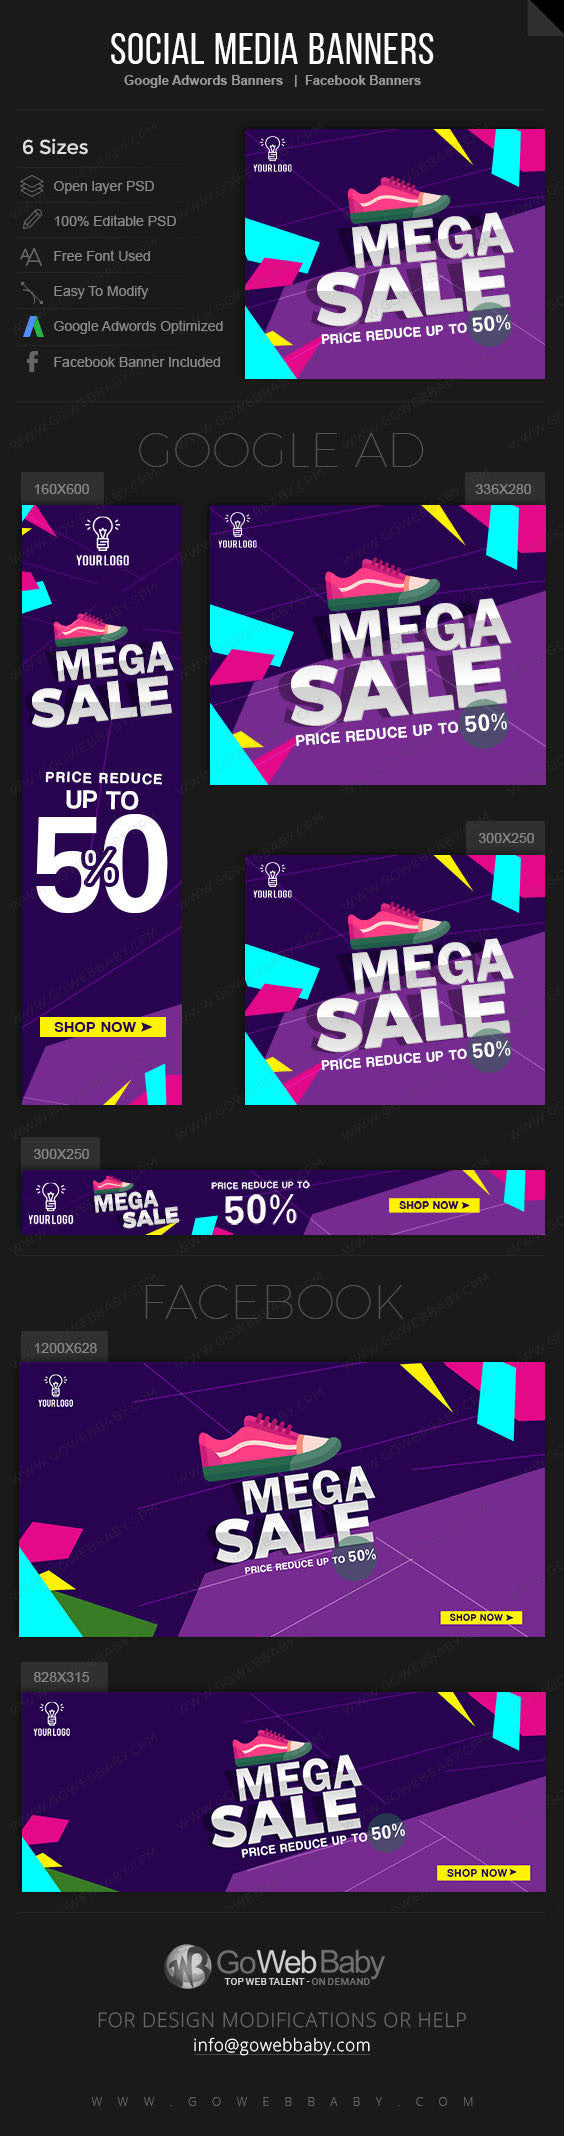 Google Adwords Display Banner with Facebook banners - Mega Sale for Website Marketing - GoWebBaby.Com